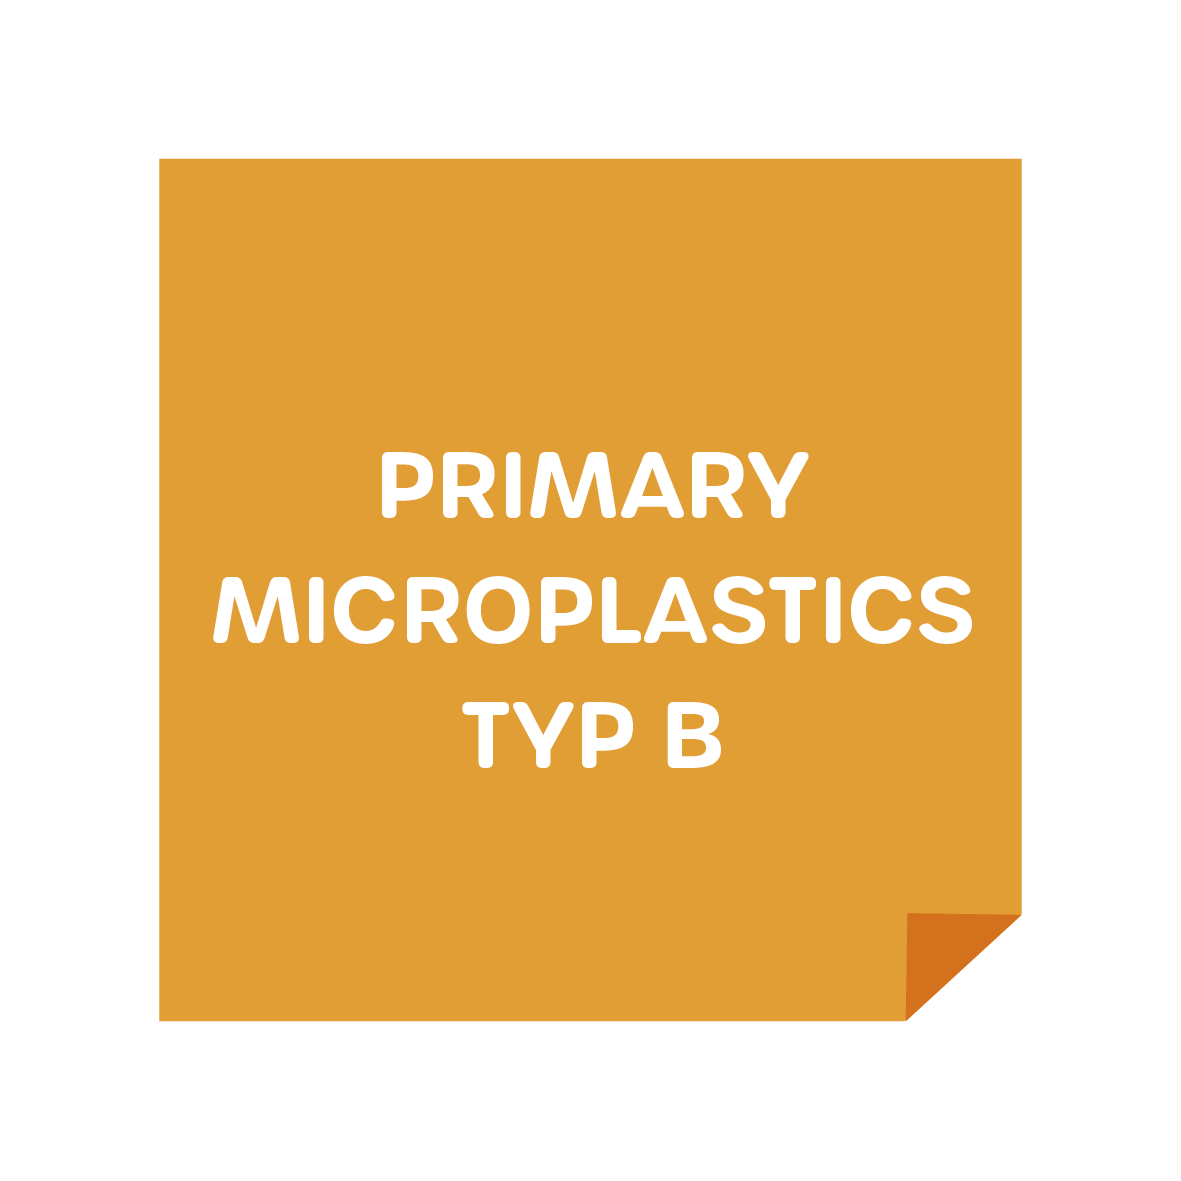 Primary Microplastics Typ B